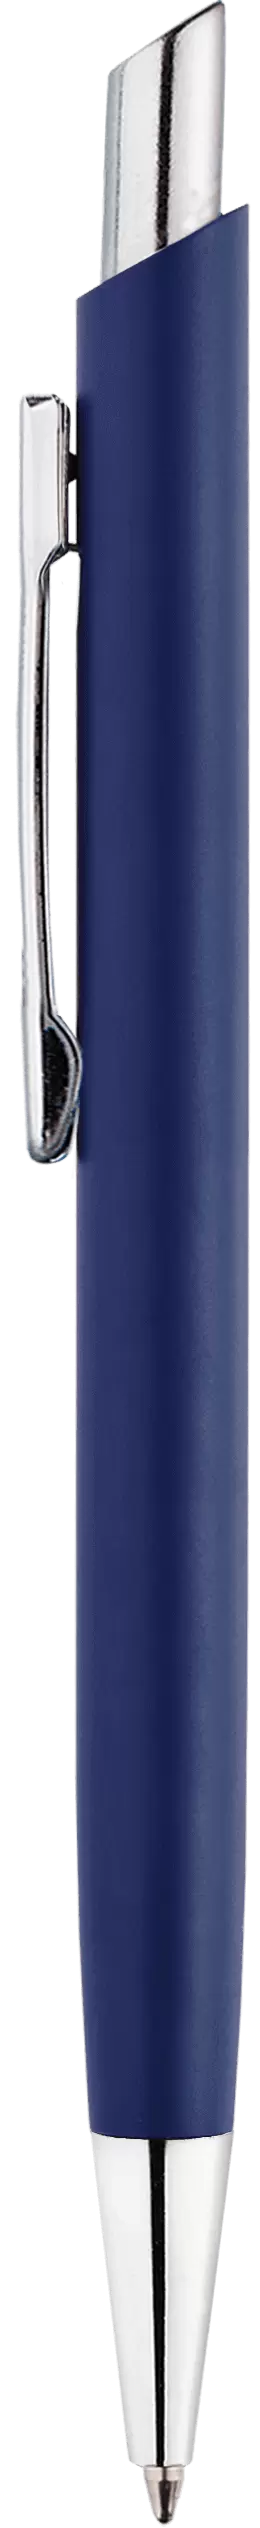 Ручка ELFARO SOFT Темно-синяя 3053-14